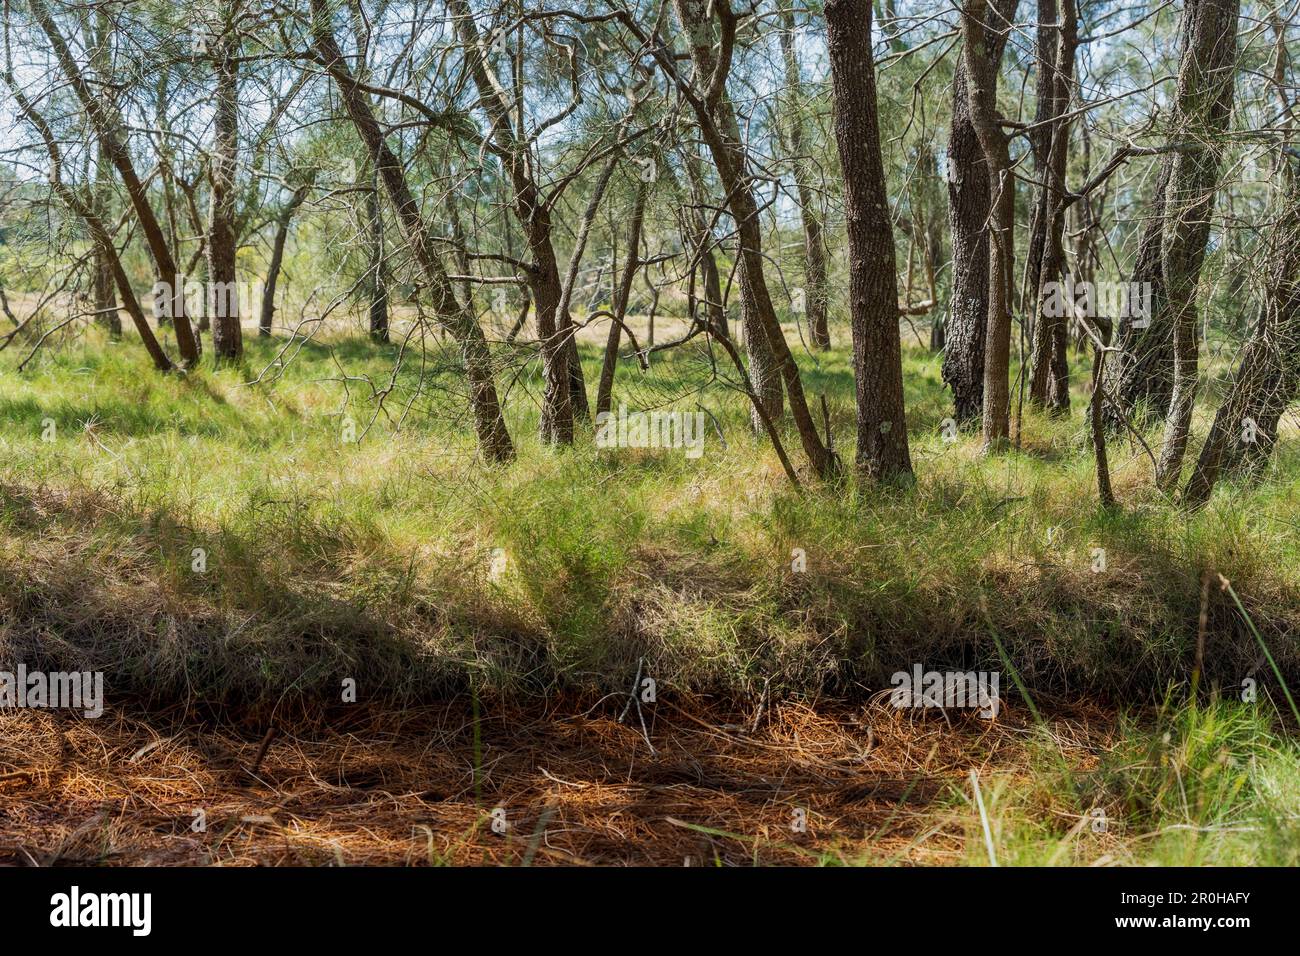 Landscape with lush green grass beneath casuarina trees in the coastal wetlands at Lota, Queensland, Australia Stock Photo